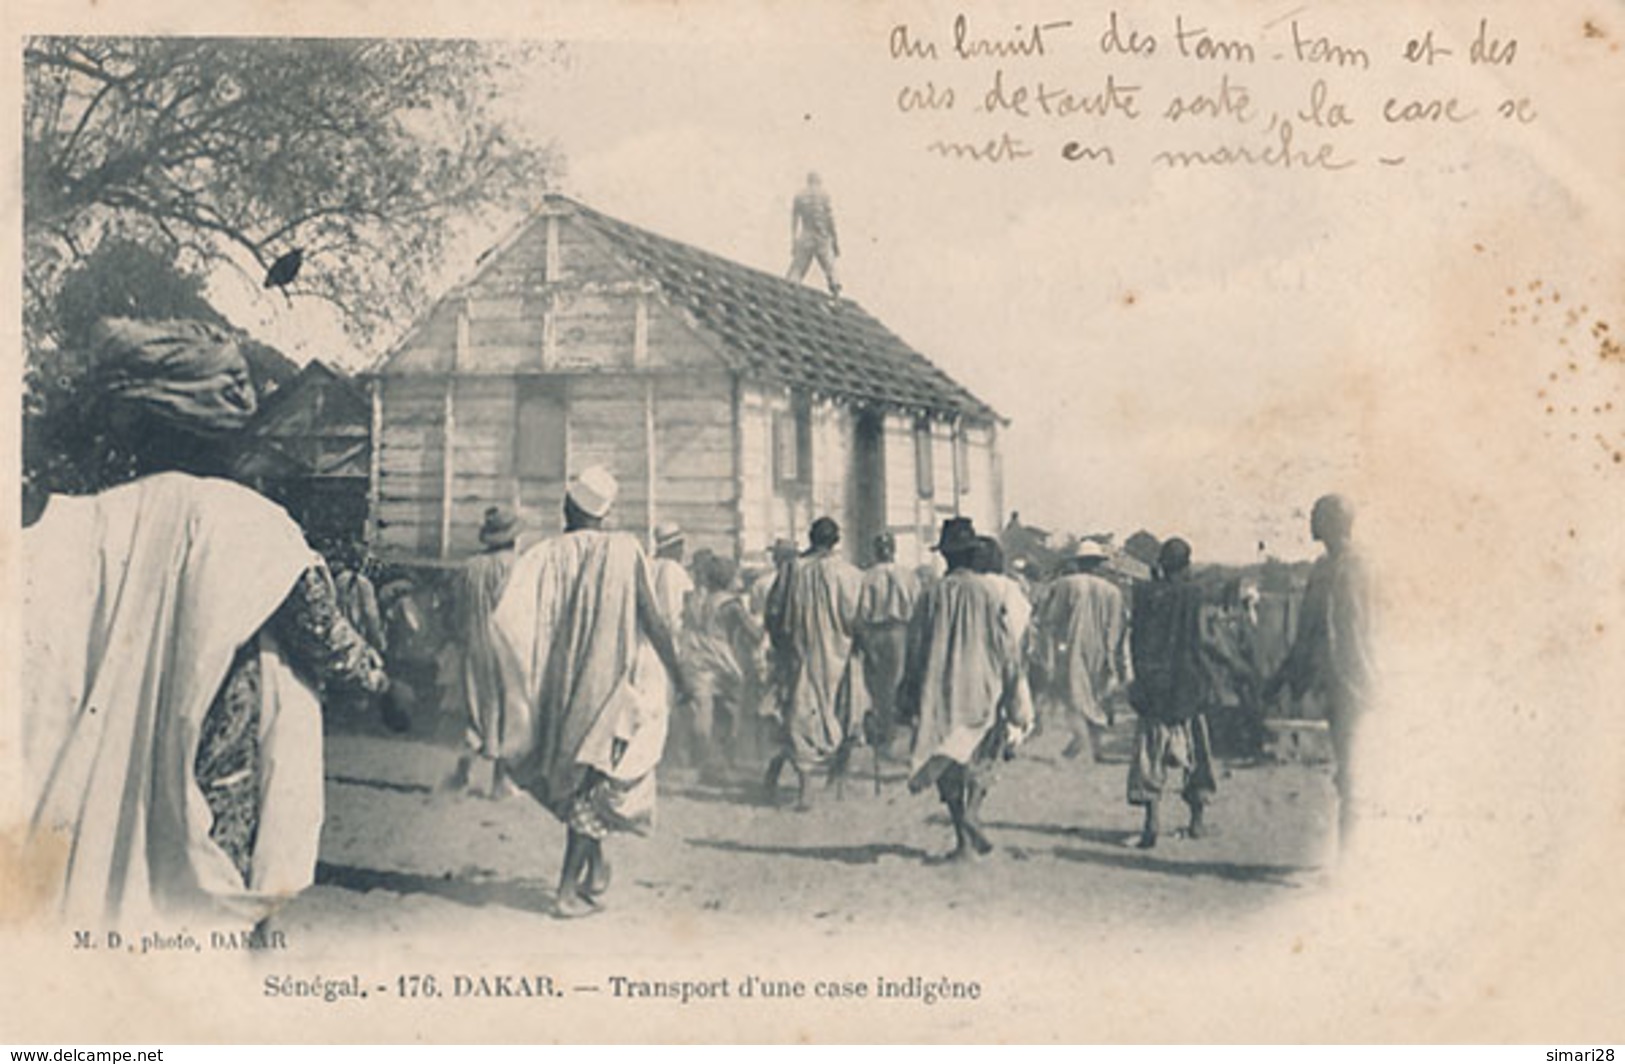 DAKAR - N° 176 - TRANSPORT D'UNE CASE INDIGENE - Sénégal